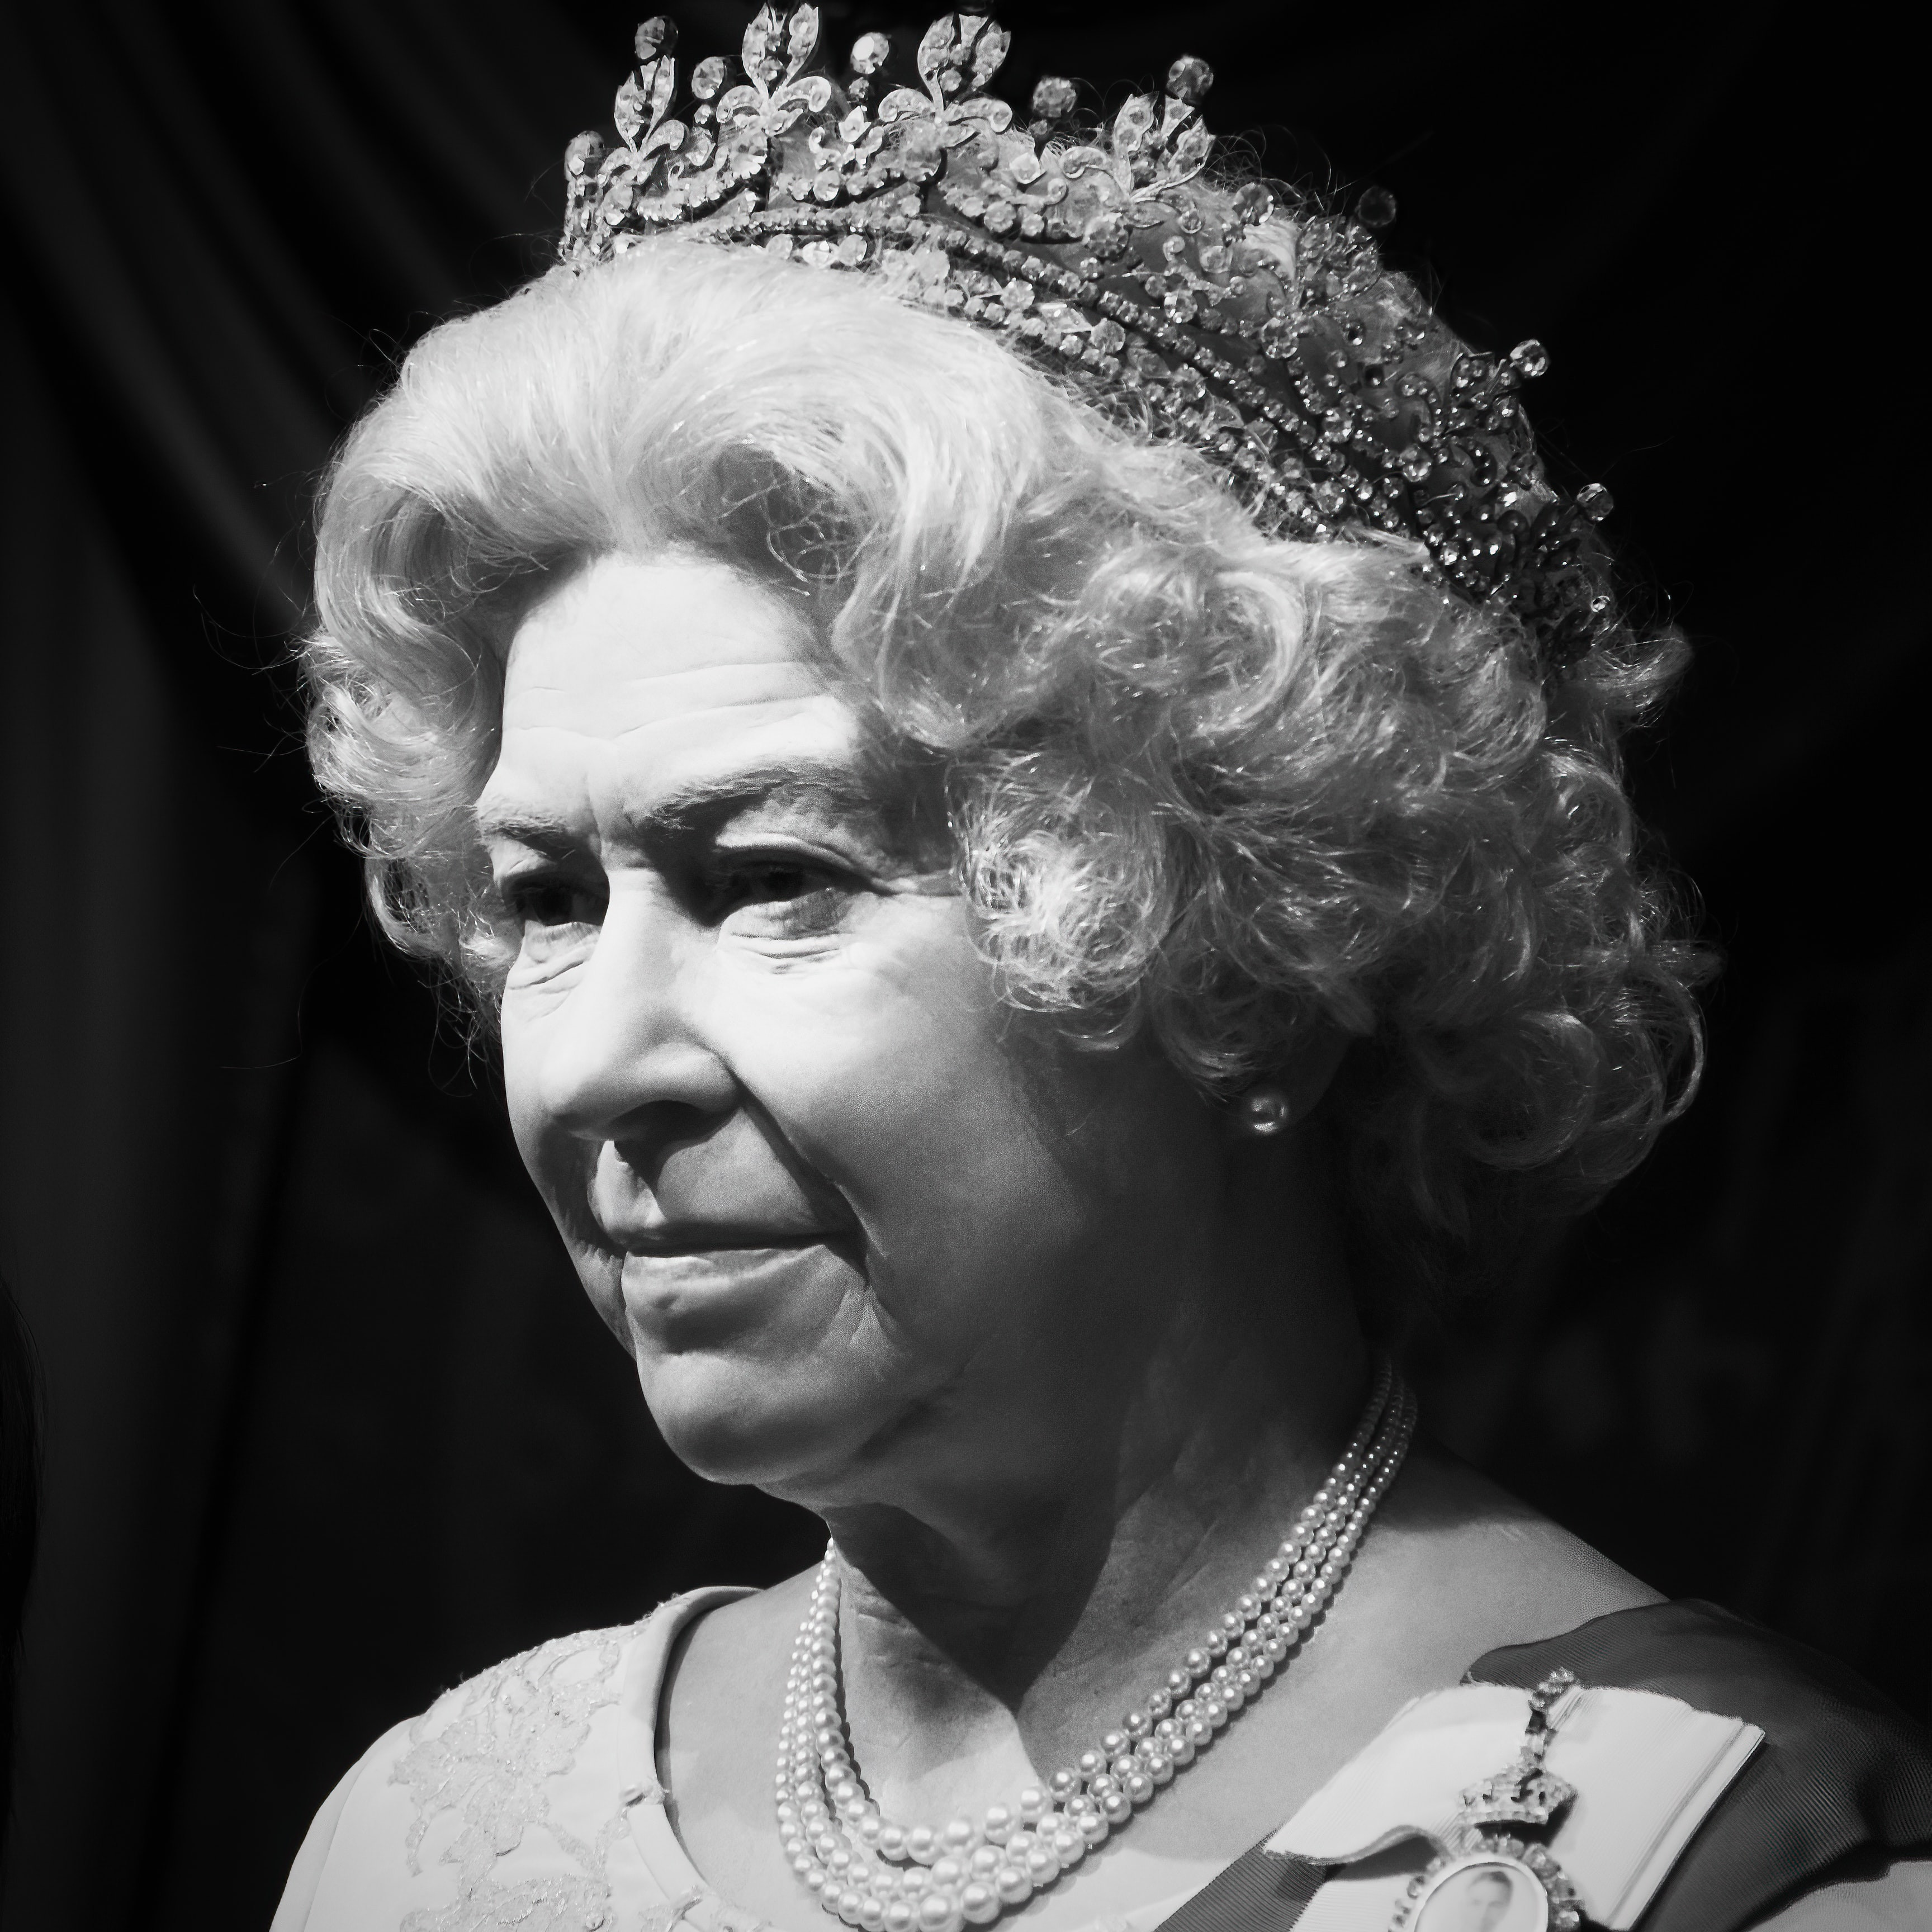 Celebrations of The Queen's Platinum Jubilee